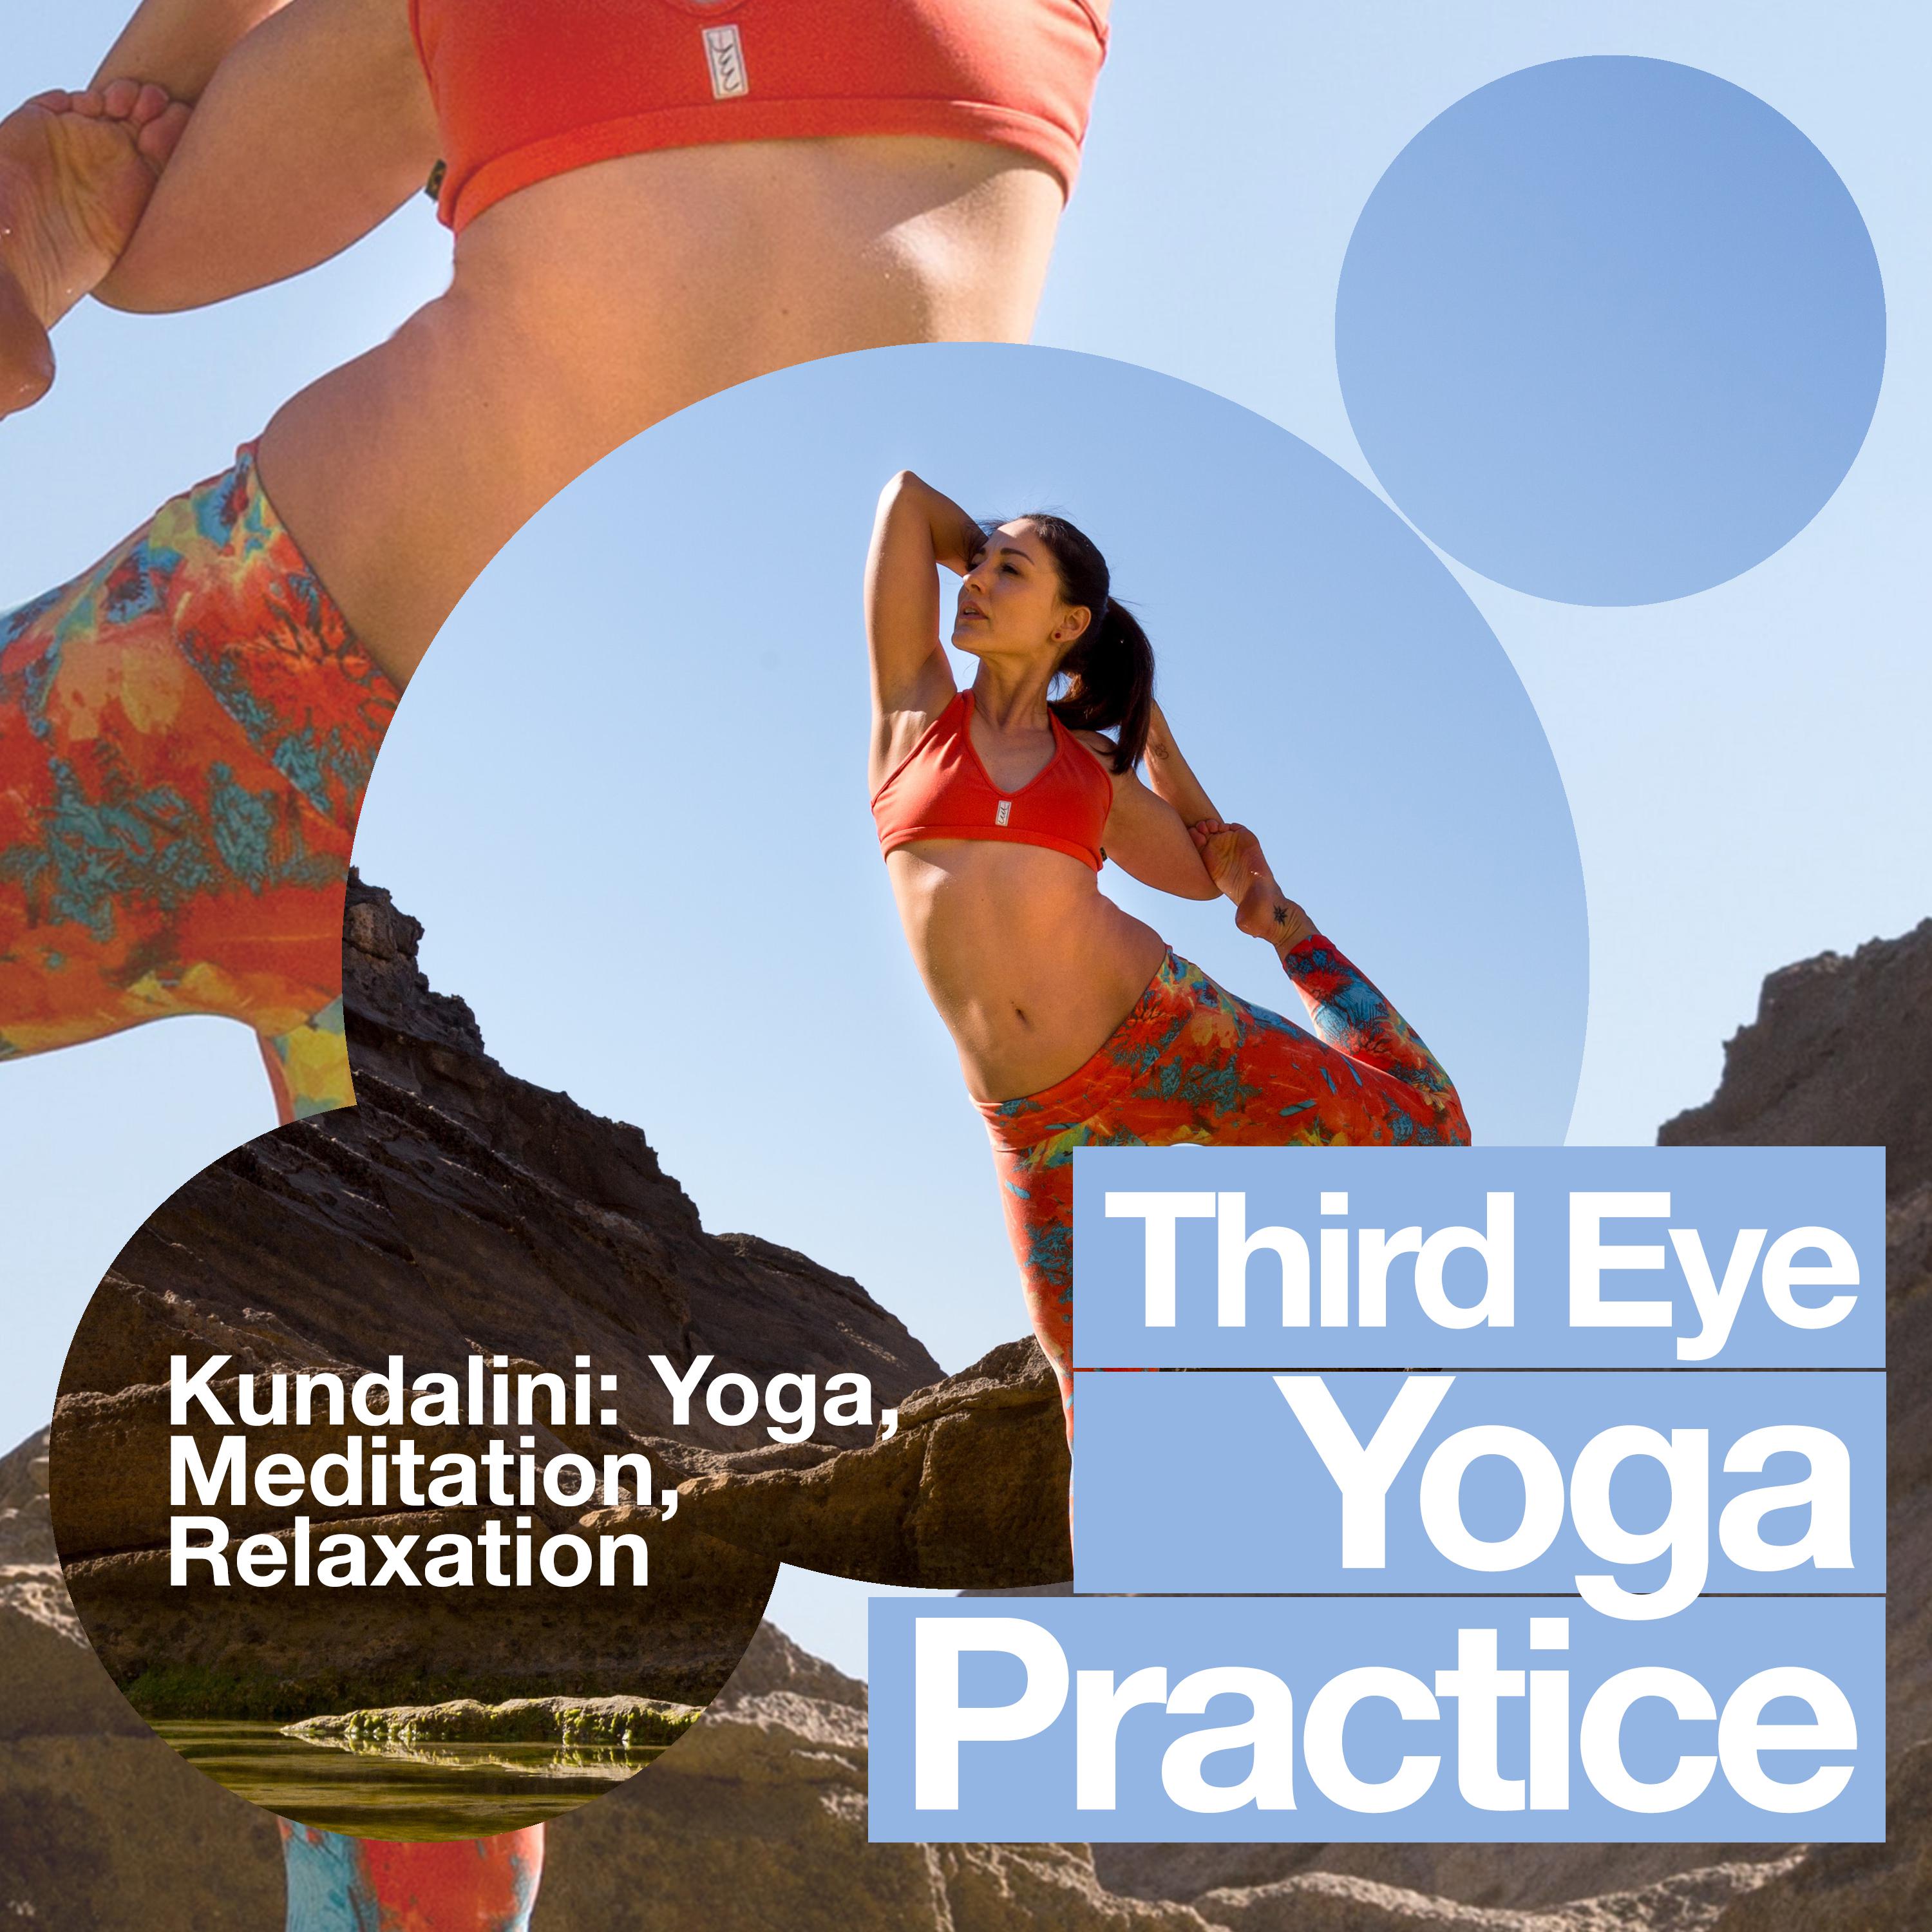 Third Eye Yoga Practice